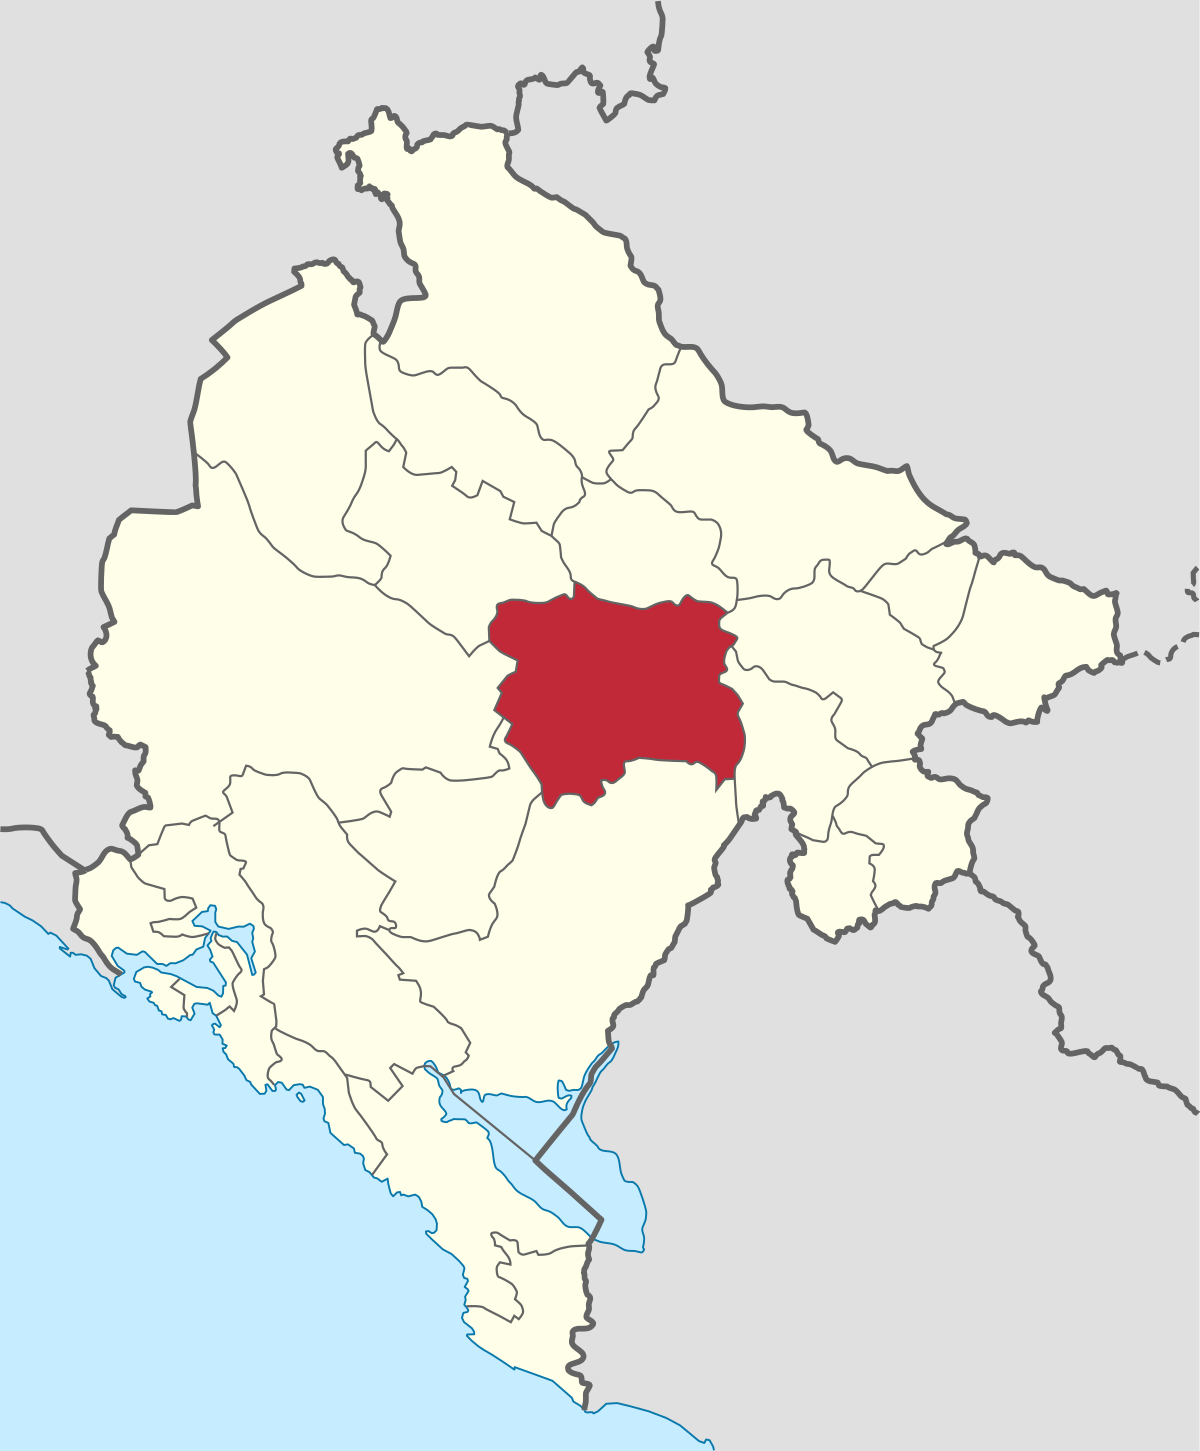 katastarska mapa crne gore Opština Kolašin   Wikipedia katastarska mapa crne gore